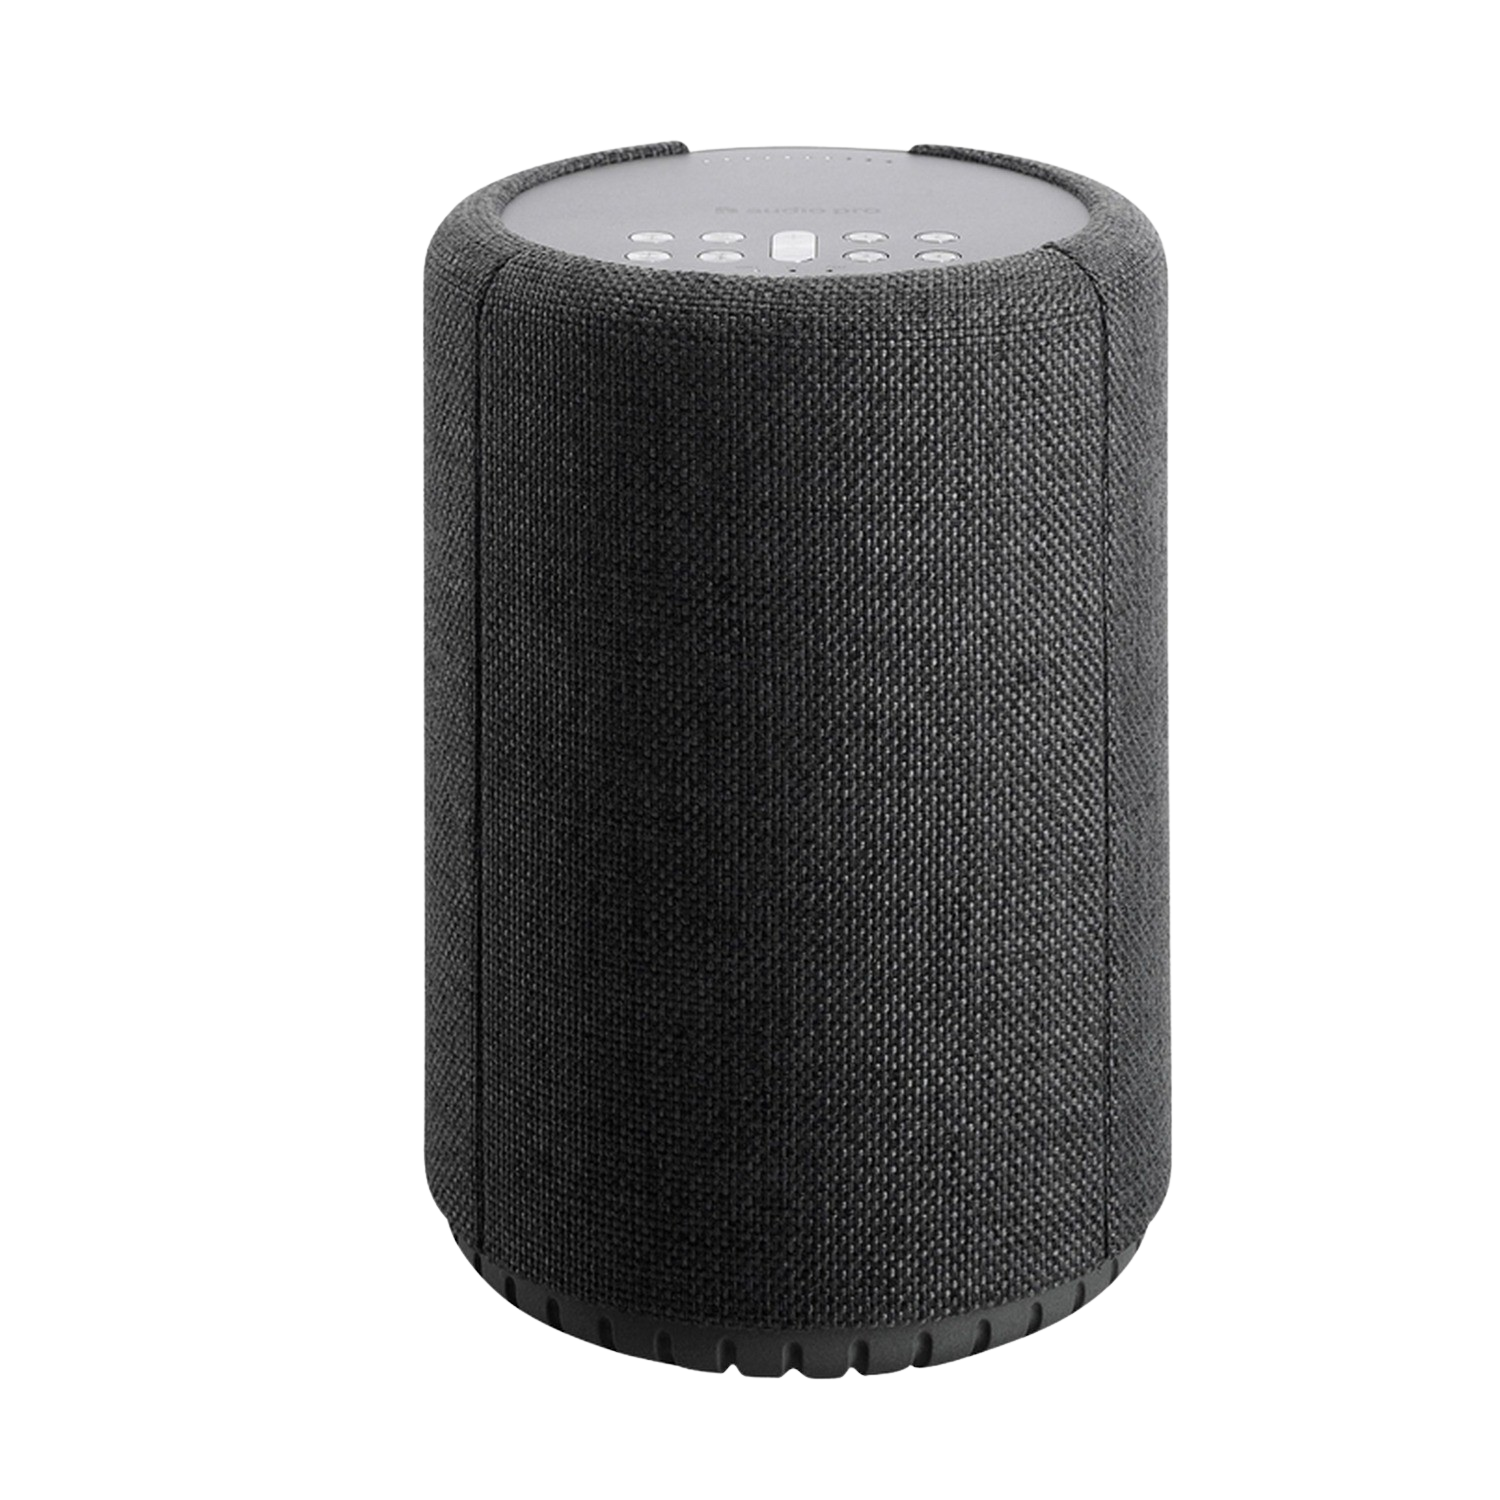 Altavoz Multiroom Control de voz amazon alexa hifi wifi bluetooth audio pro a10 gris oscuro inteligente dark grey 50 rms distribución sonido 360